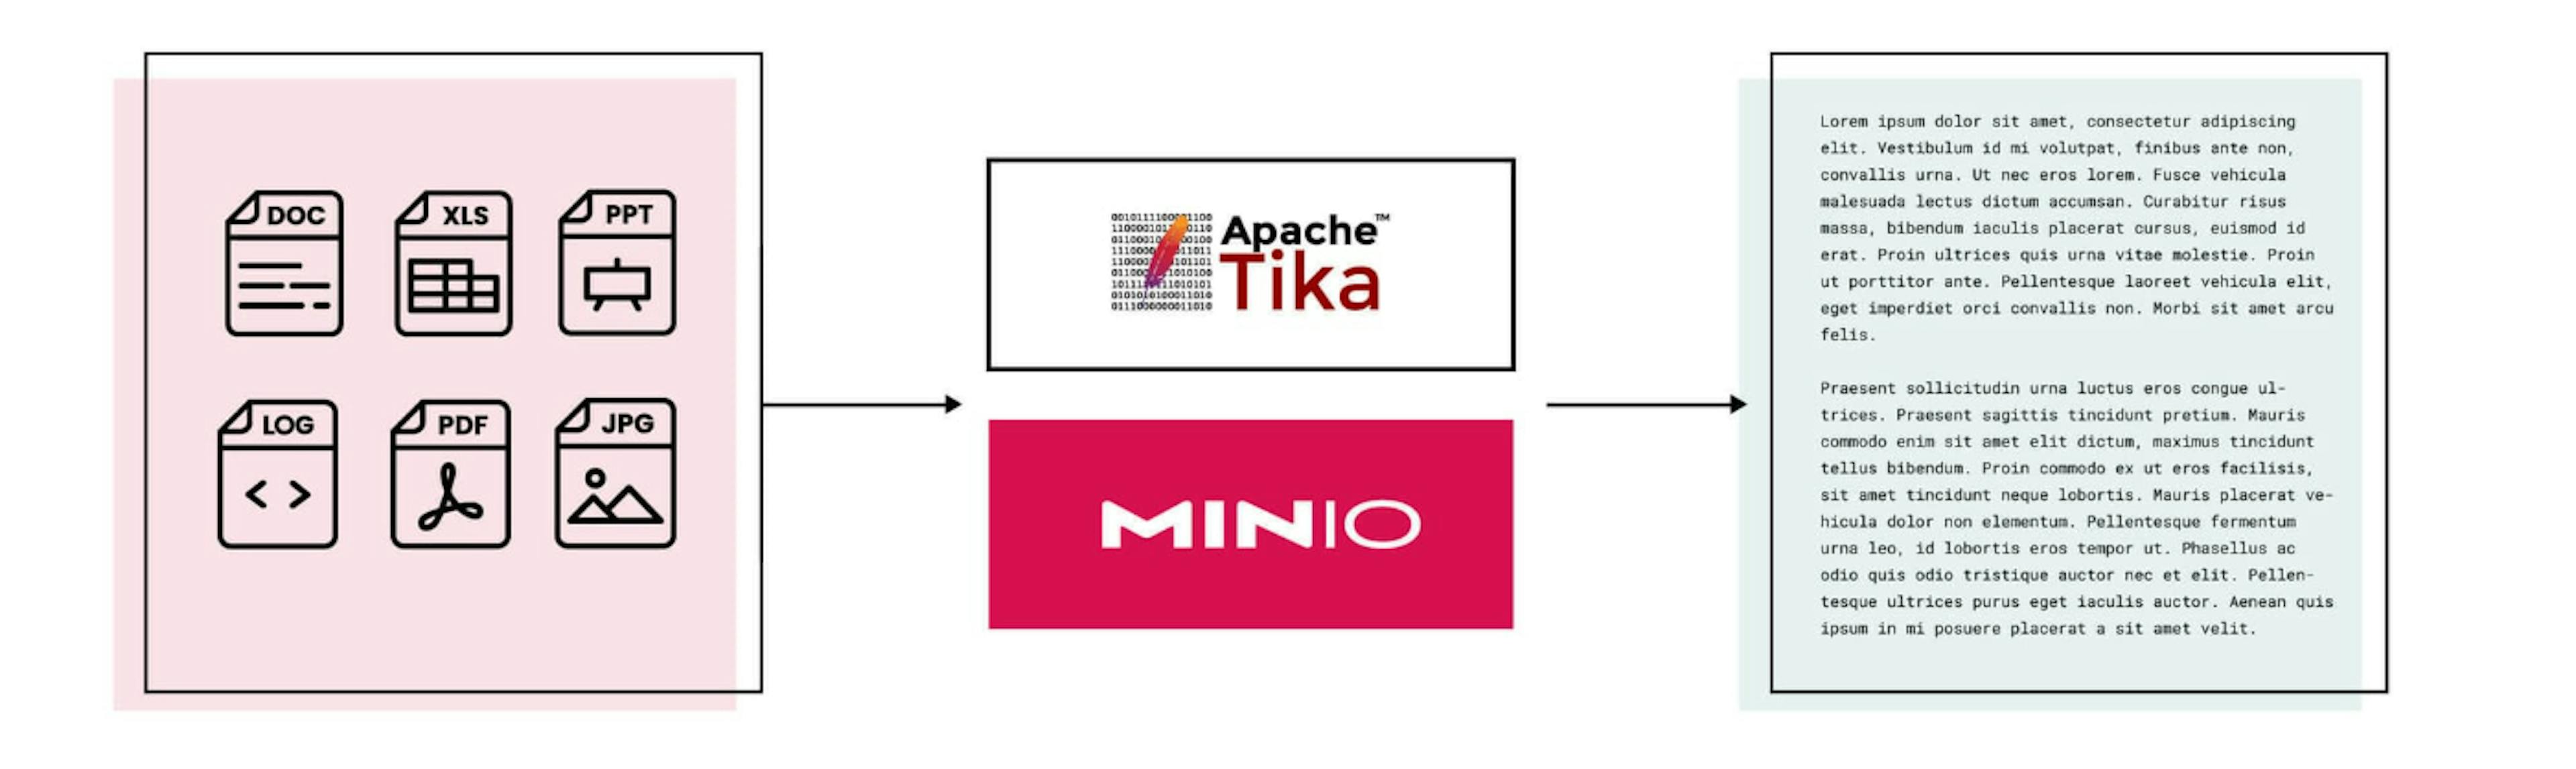 featured image - MinIO と Apache Tika を活用した自動テキスト抽出と分析